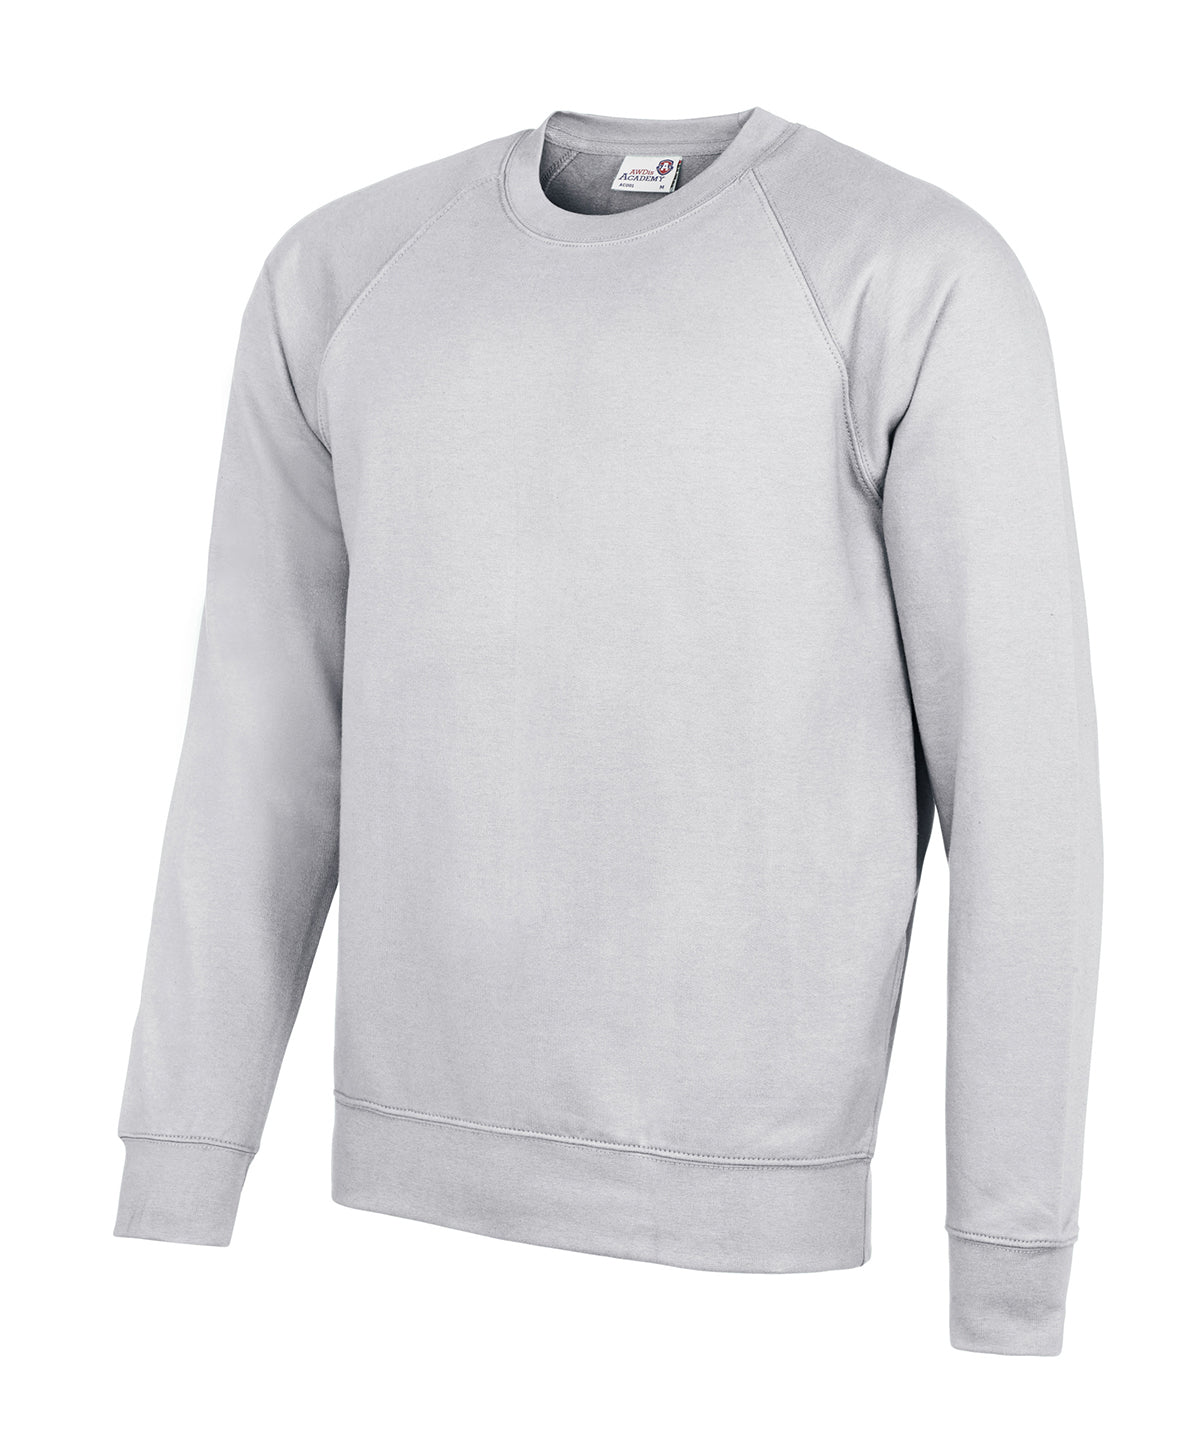 Personalised Sweatshirts - Burgundy AWDis Academy Senior Academy raglan sweatshirt